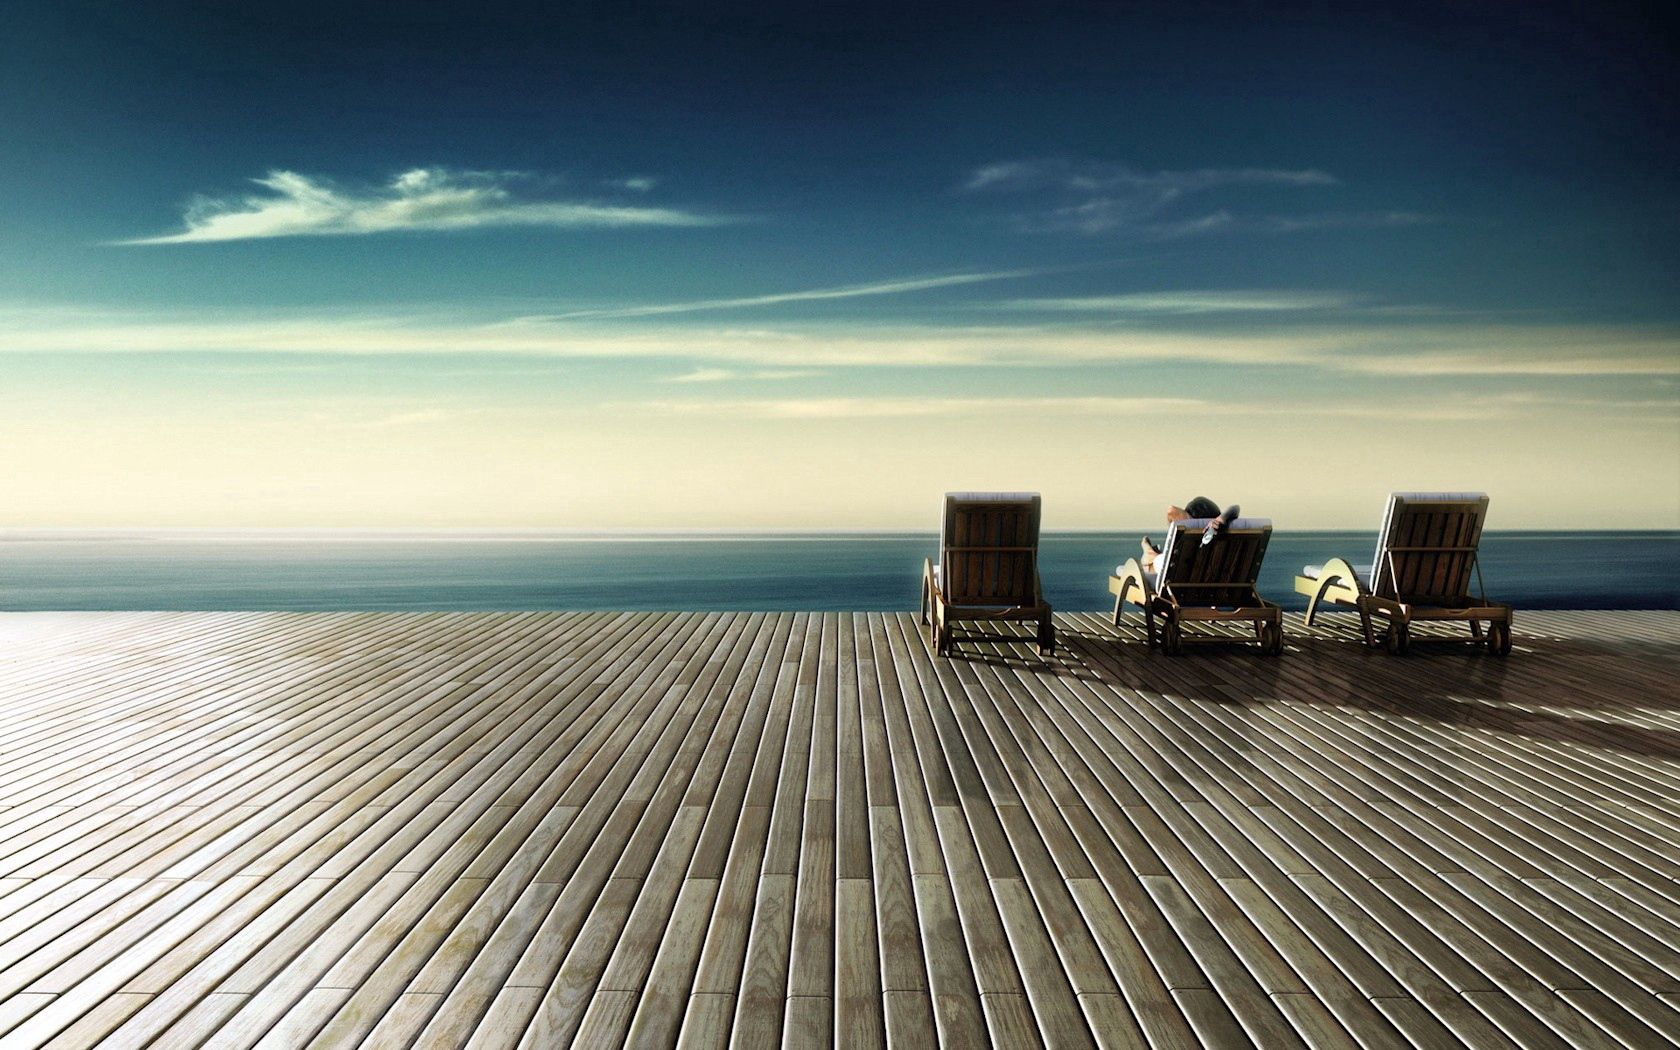 rest, miscellanea, sky, shore, bank, miscellaneous, relaxation, sun loungers, sun beds, wooden floor